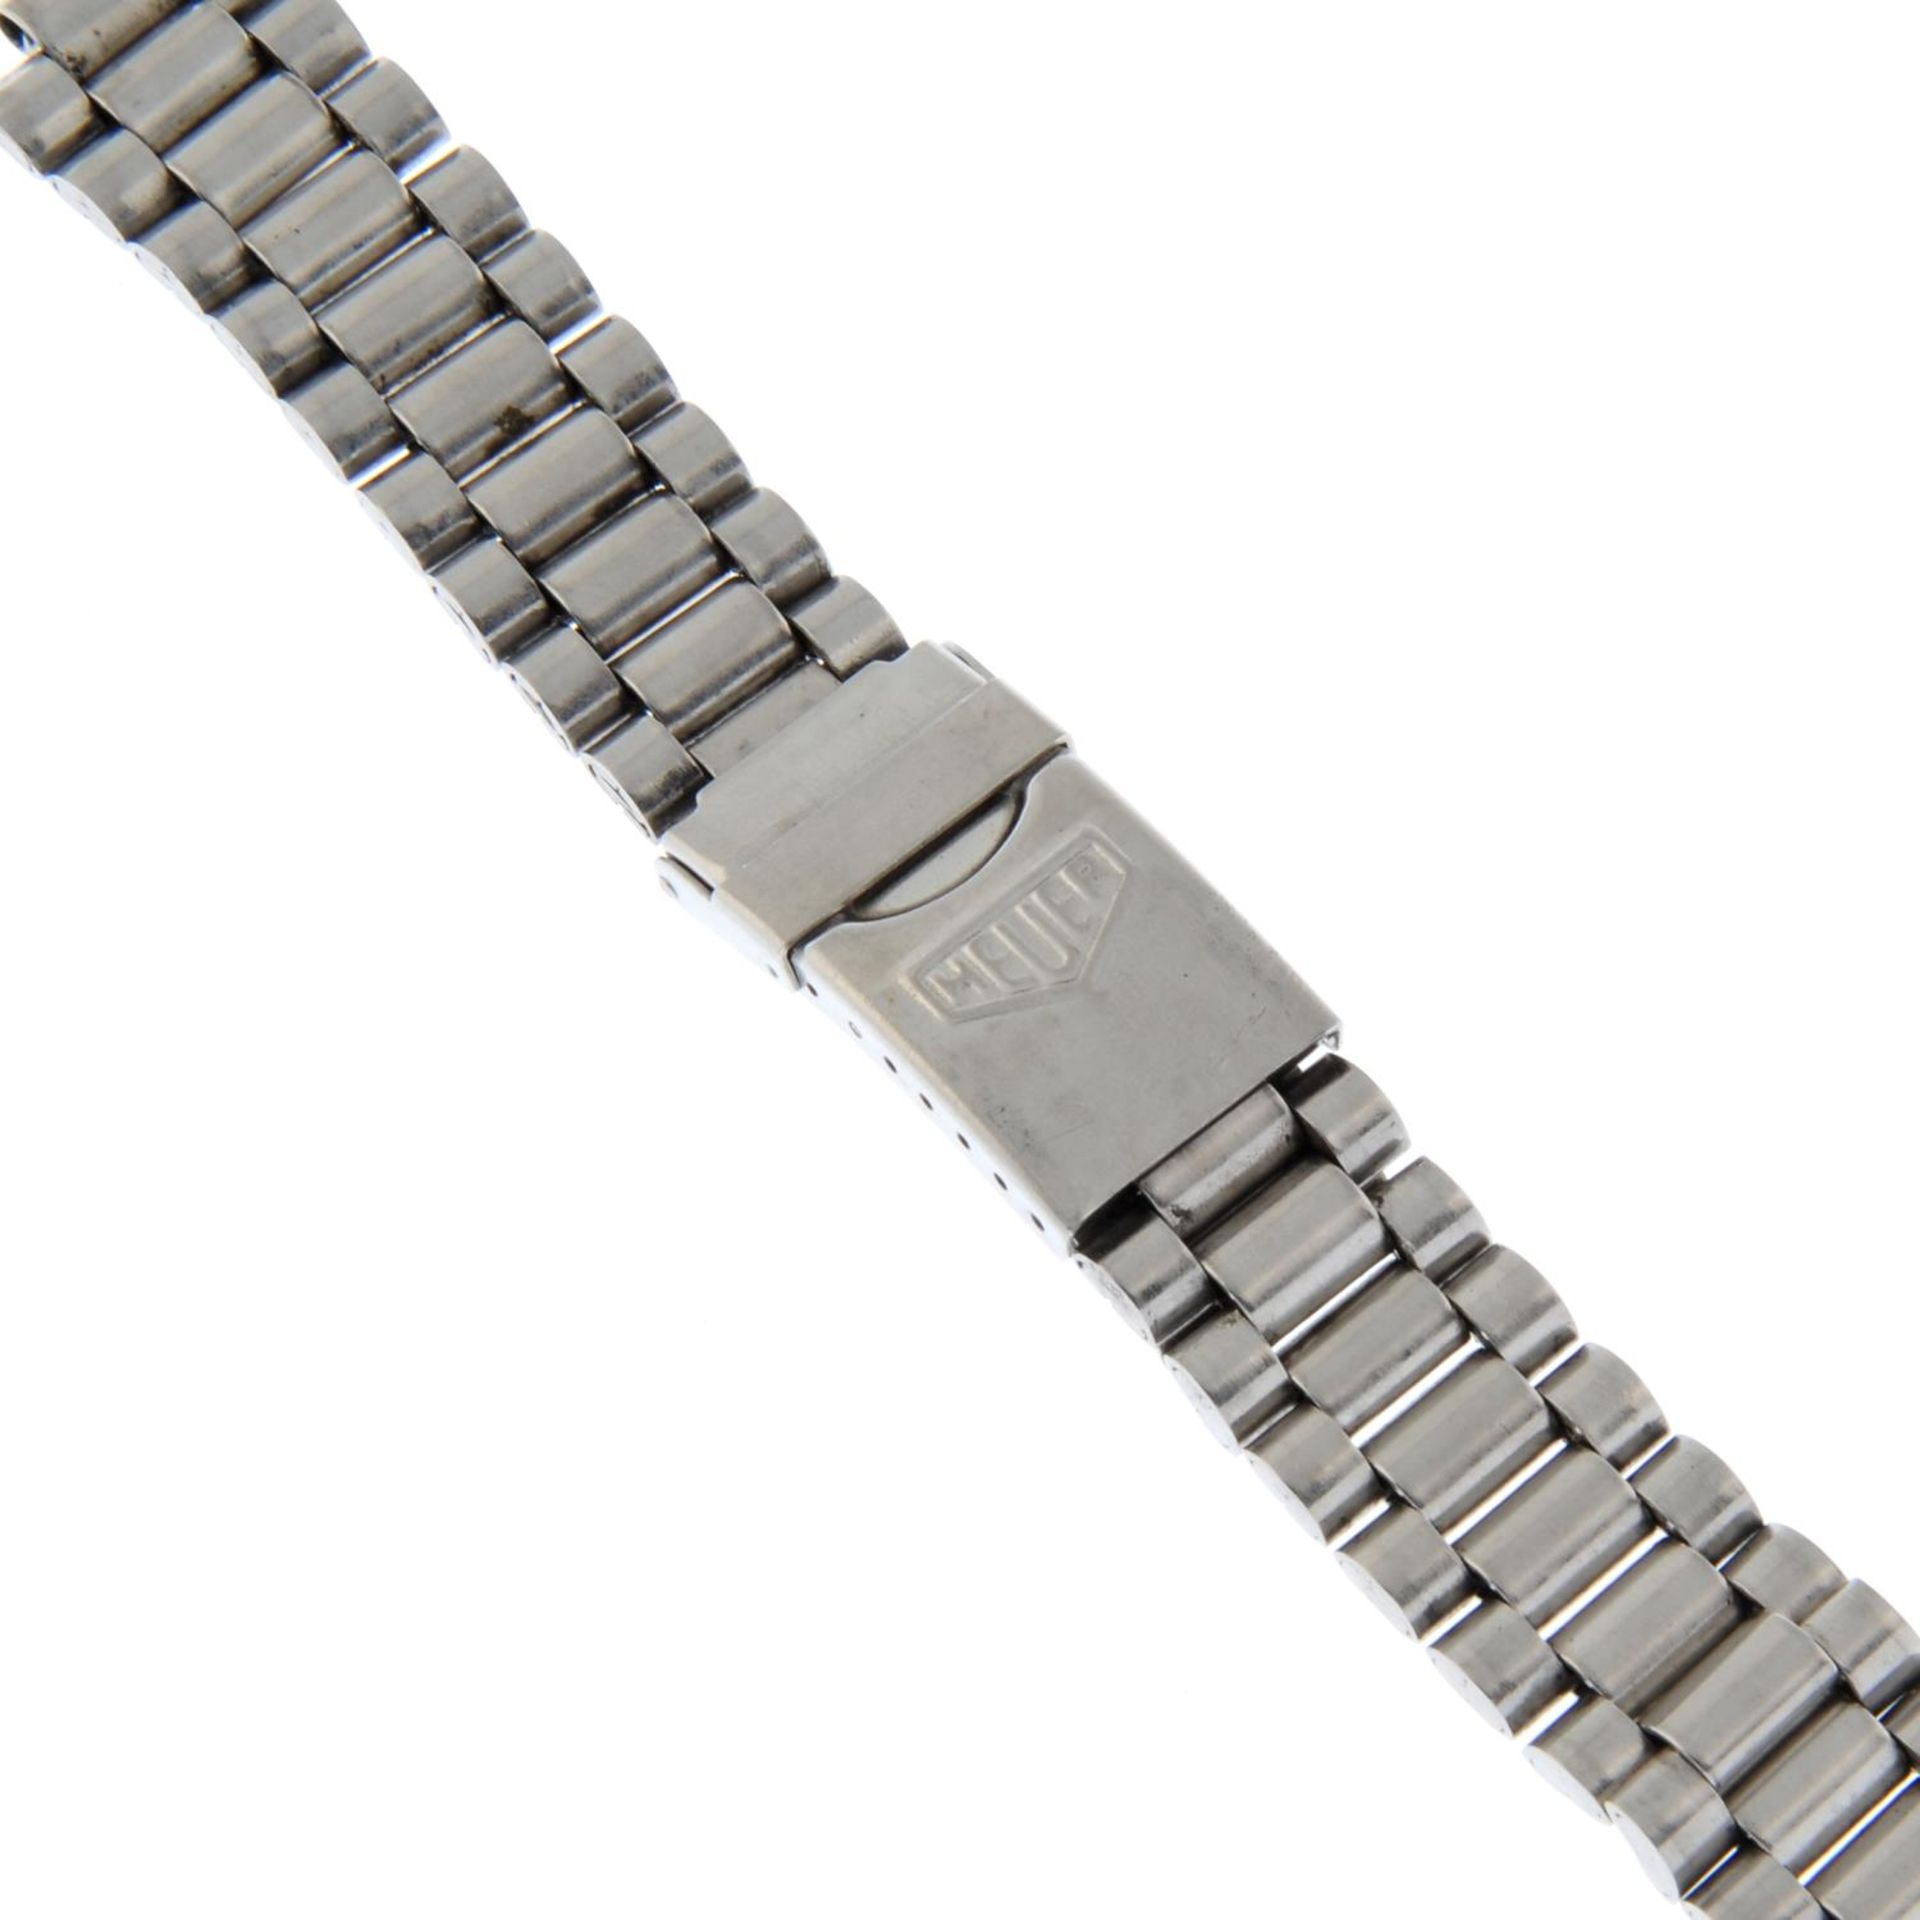 HEUER - a Carrera chronograph bracelet watch. - Image 6 of 6